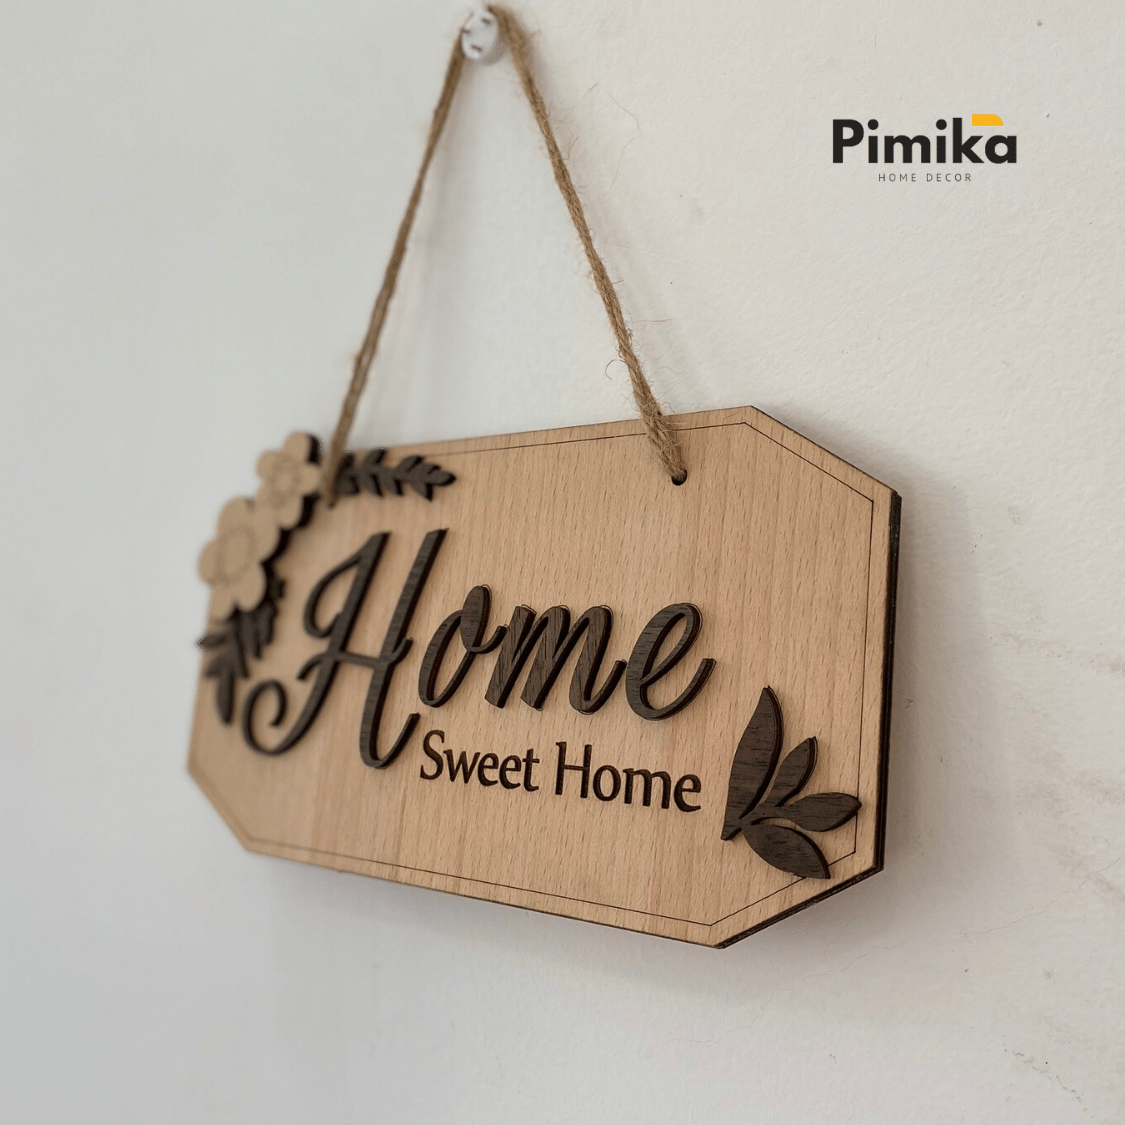 Bảng gỗ treo Home Sweet Home 1 | Pimika Home